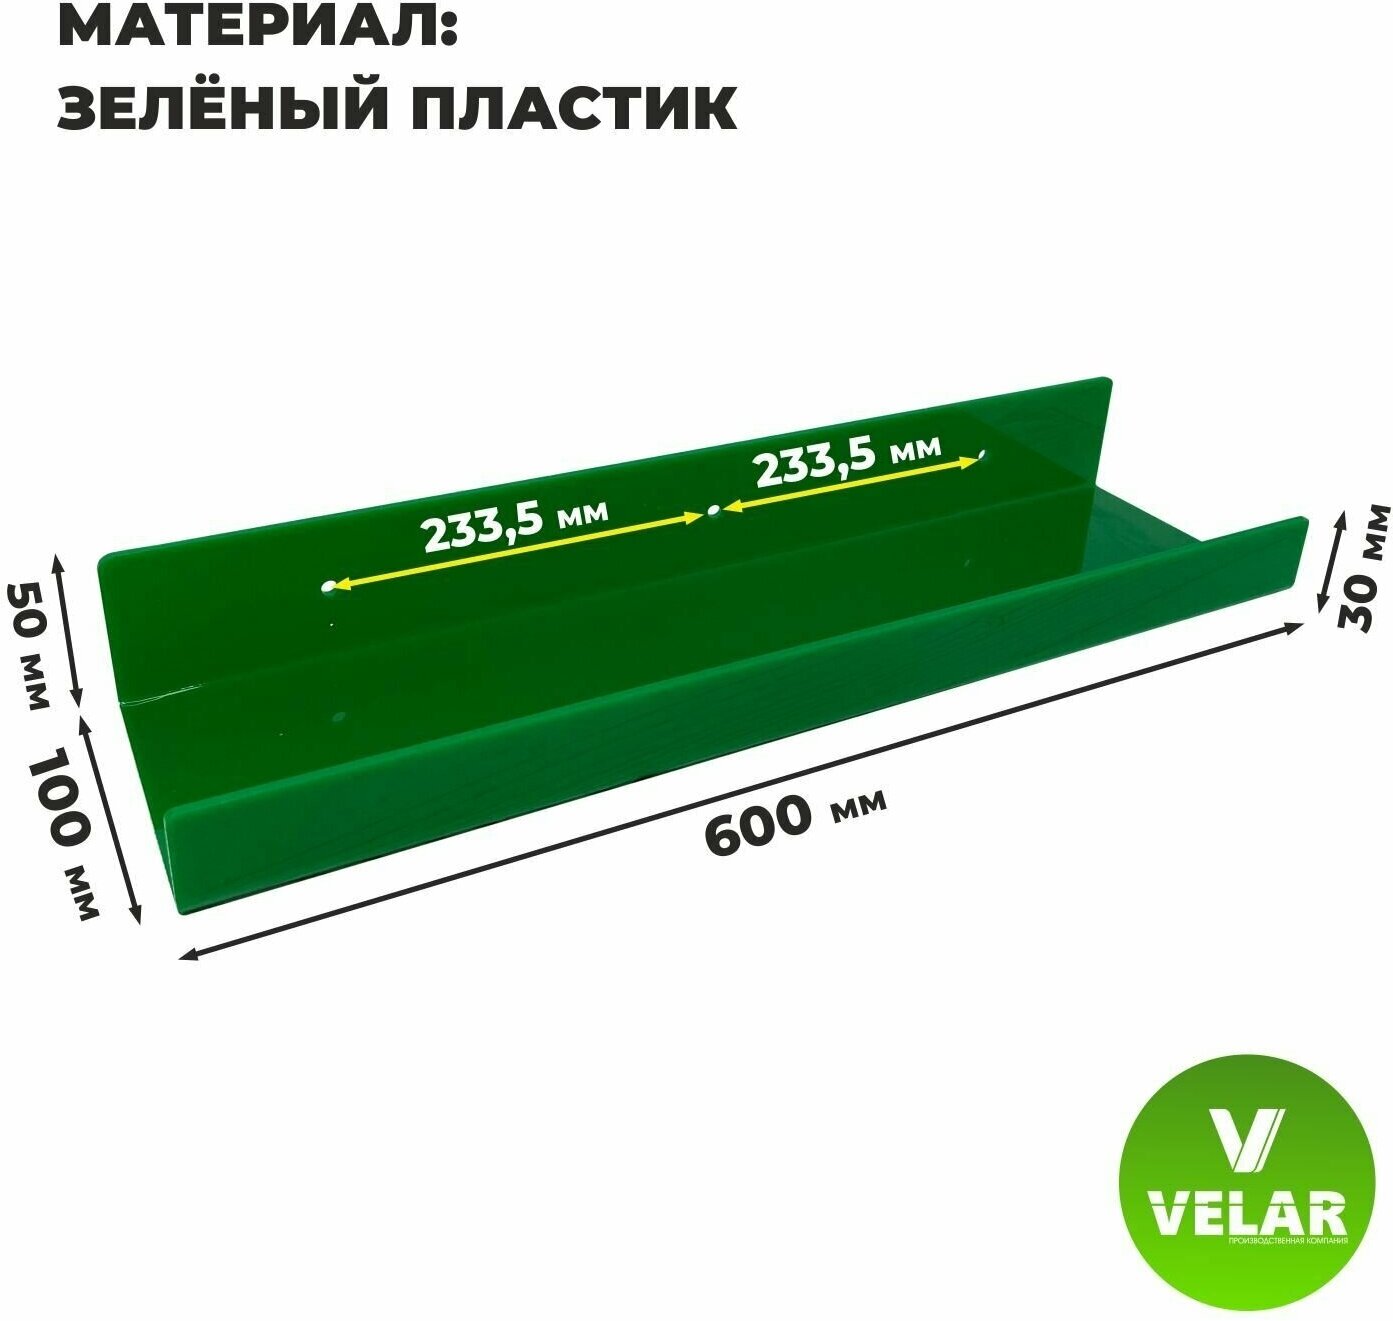 Полка настенная прямая интерьерная, 60х10.5 см, 1 шт, пластик 3 мм, цвет зеленый, Velar